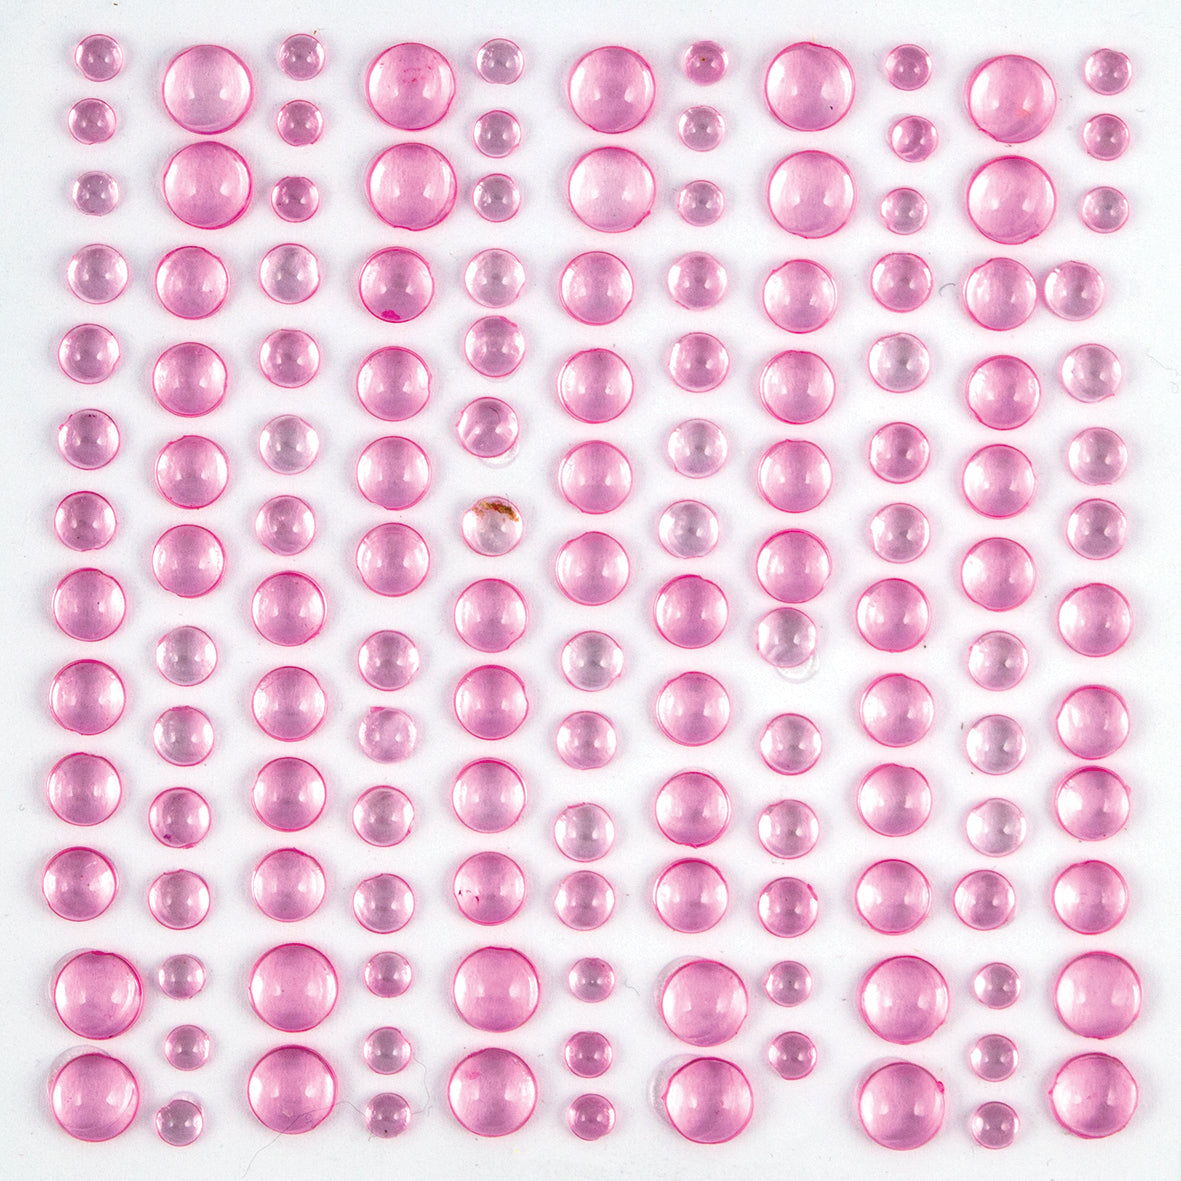 Craft Consortium Adhesive Dew Drops - Pink